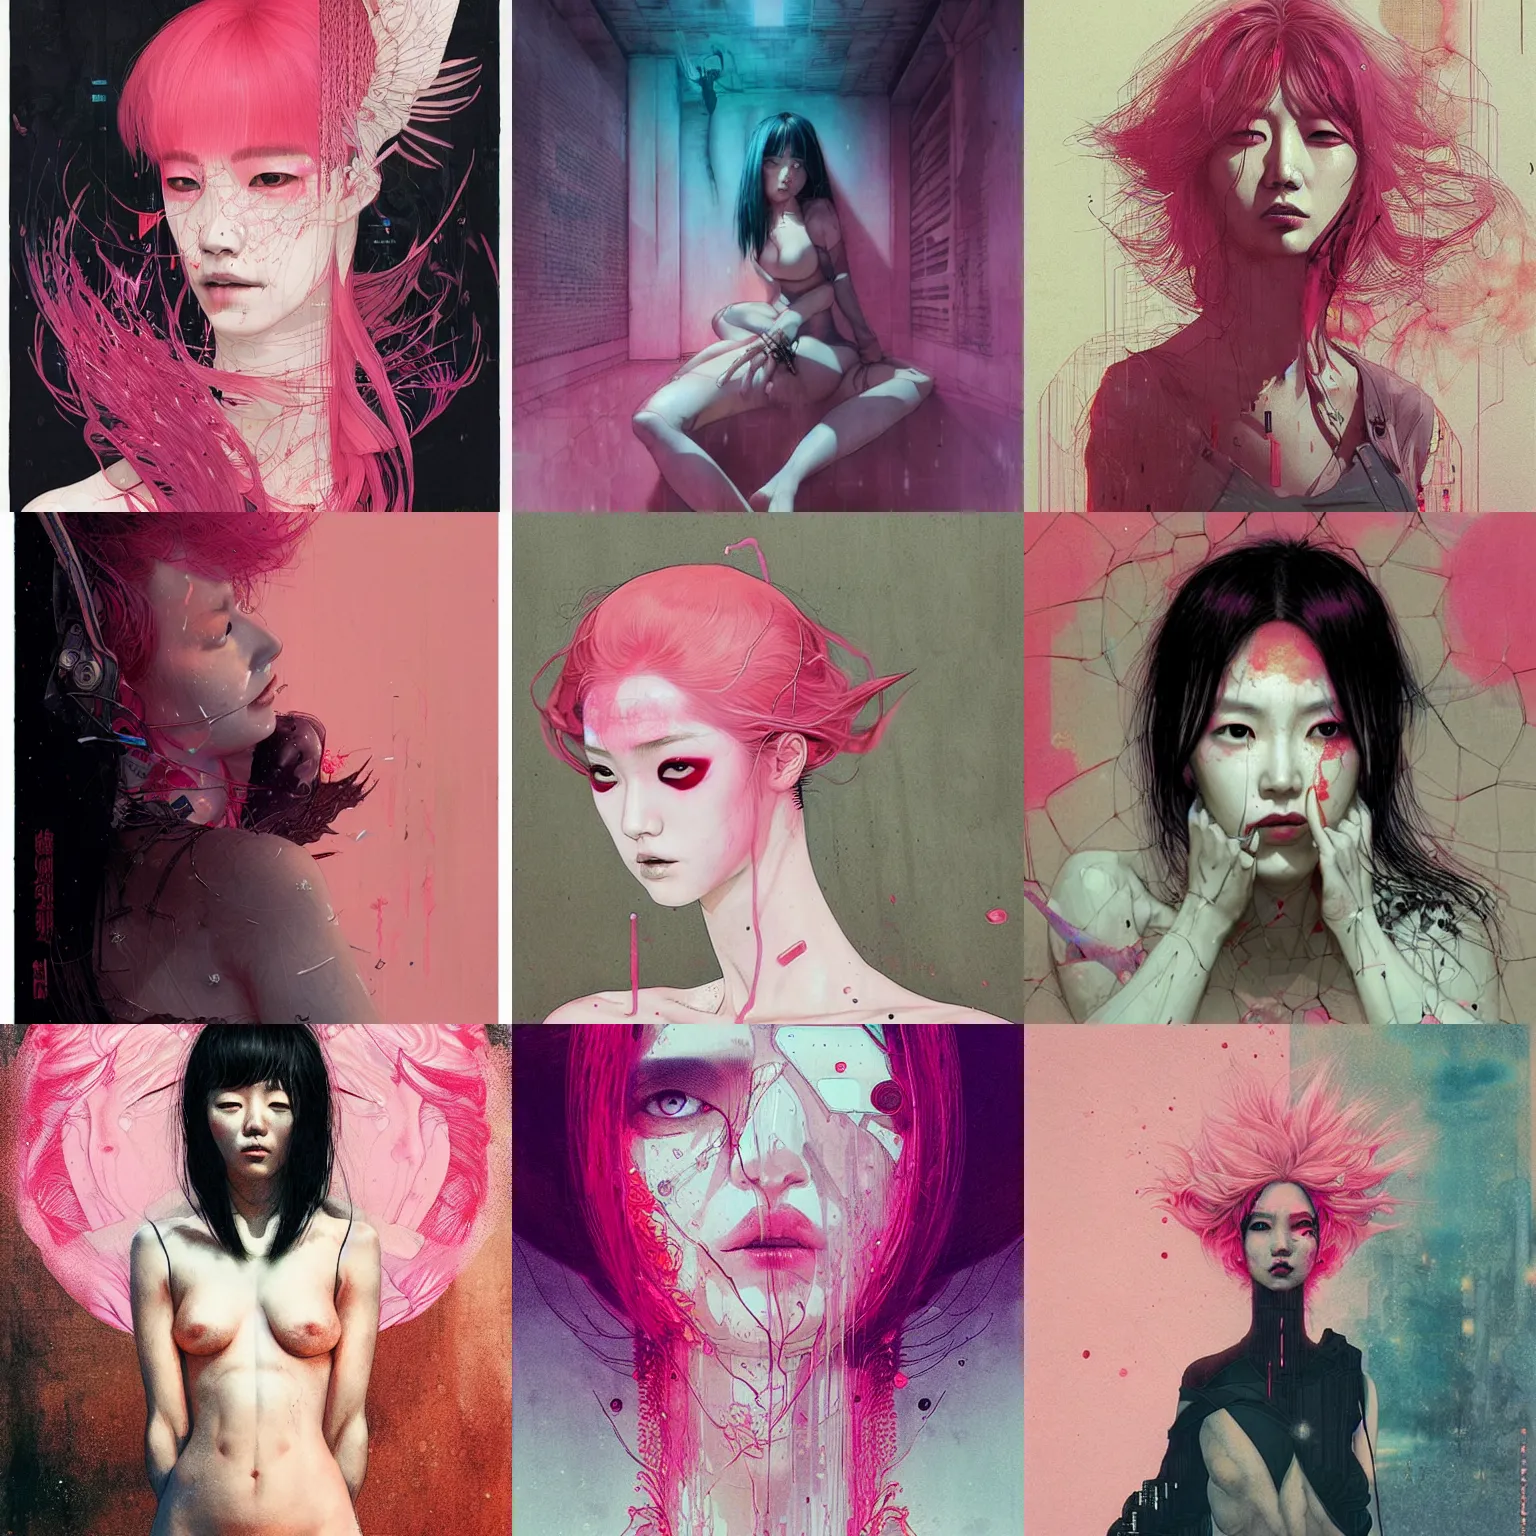 Prompt: lee jin - eun emerging from pink violent maelstorm in cyberpunk theme by conrad roset, nicola samuri, dino valls, m. w. kaluta, rule of thirds, seductive look, beautiful